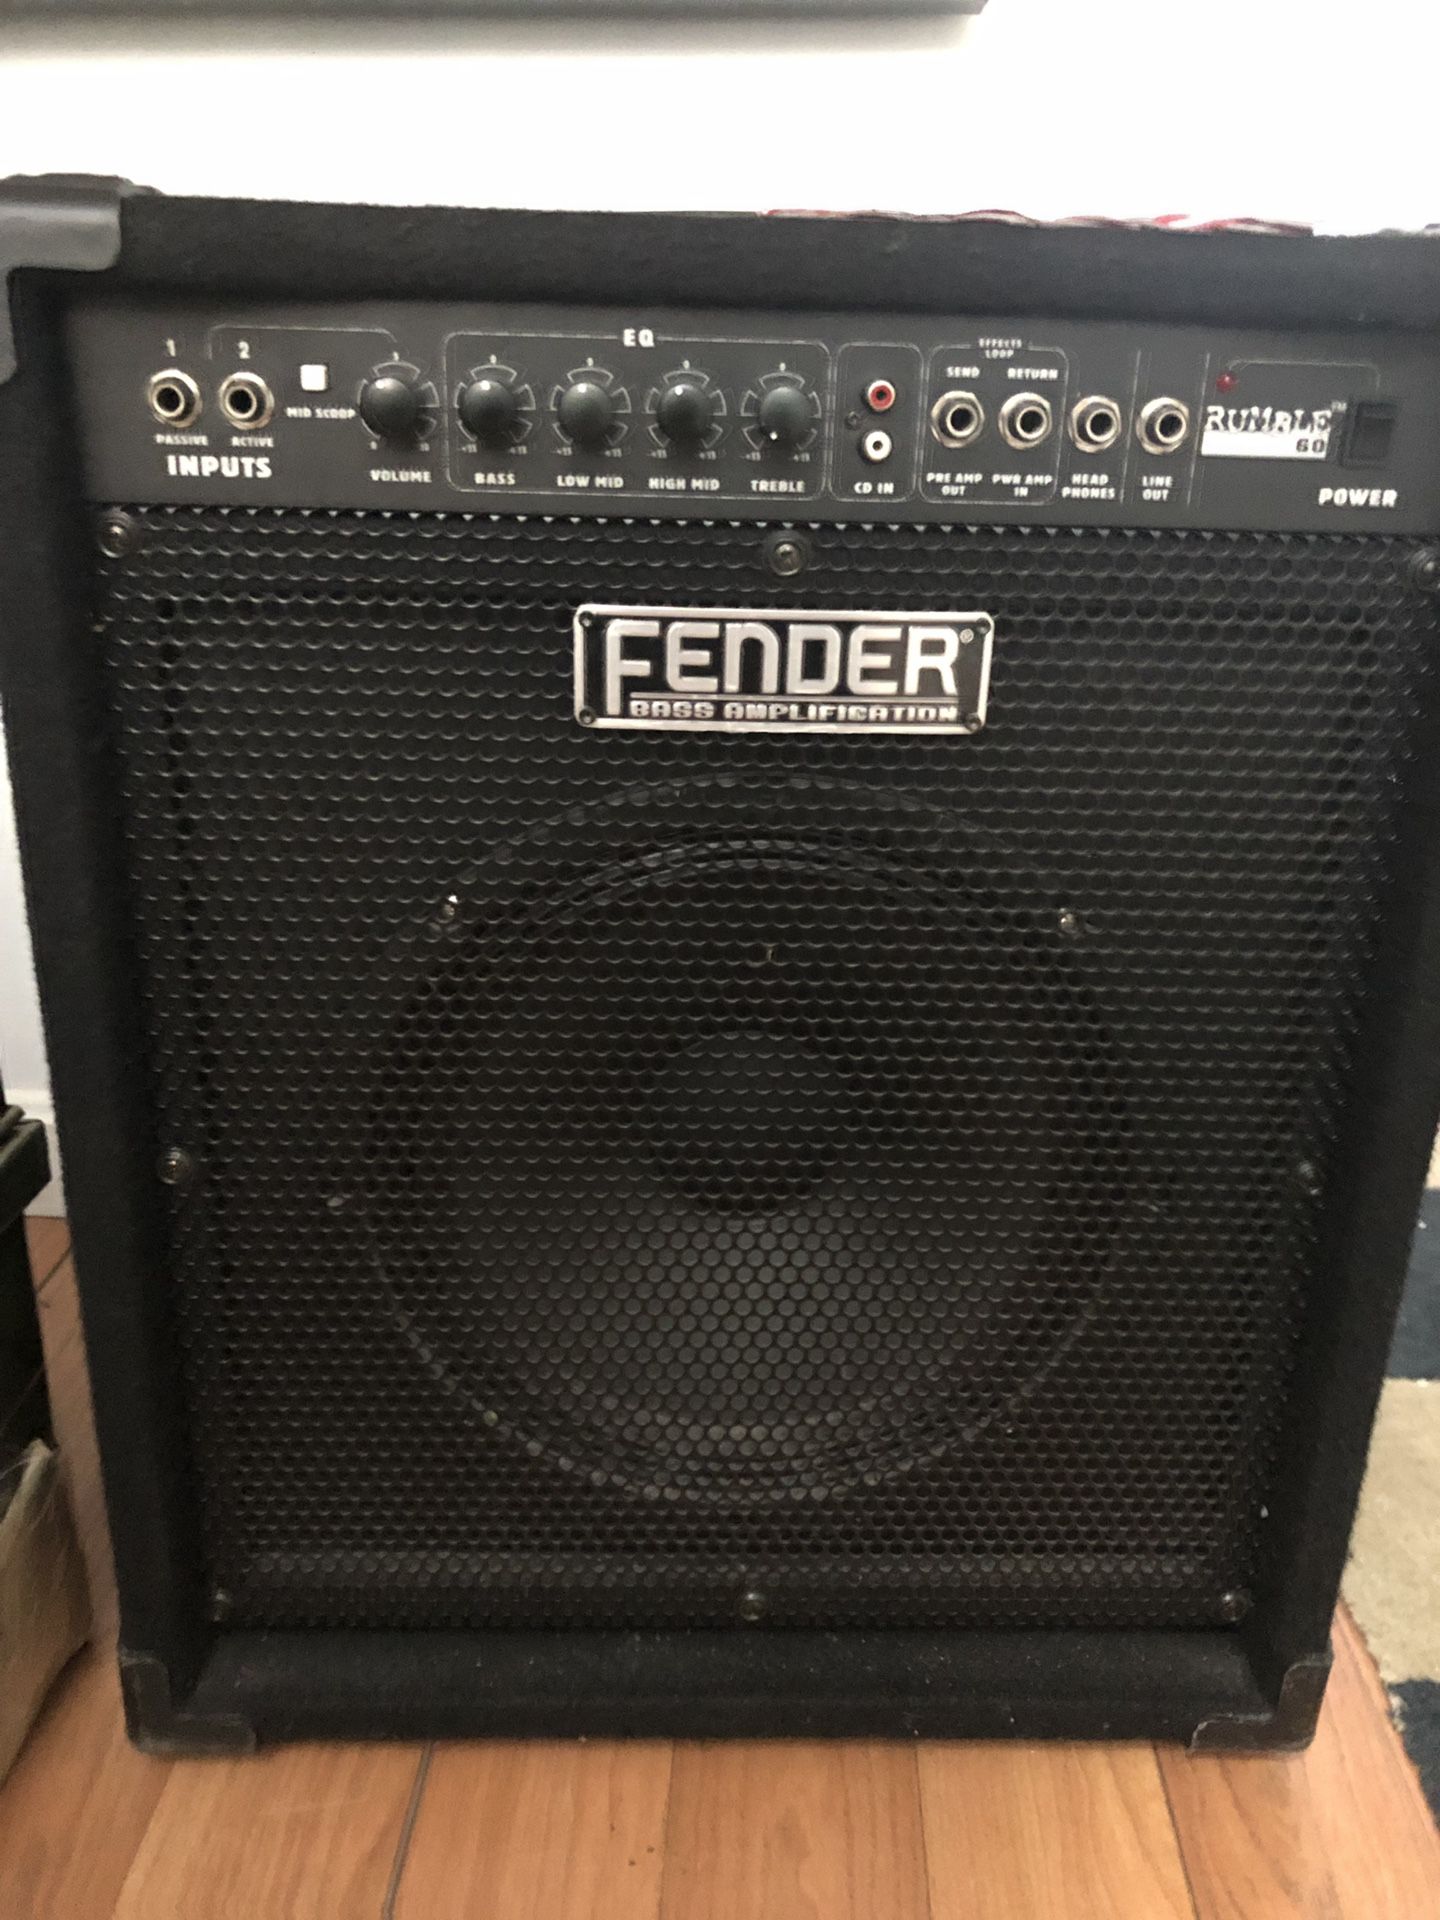 Fender rumble 60 bass amp